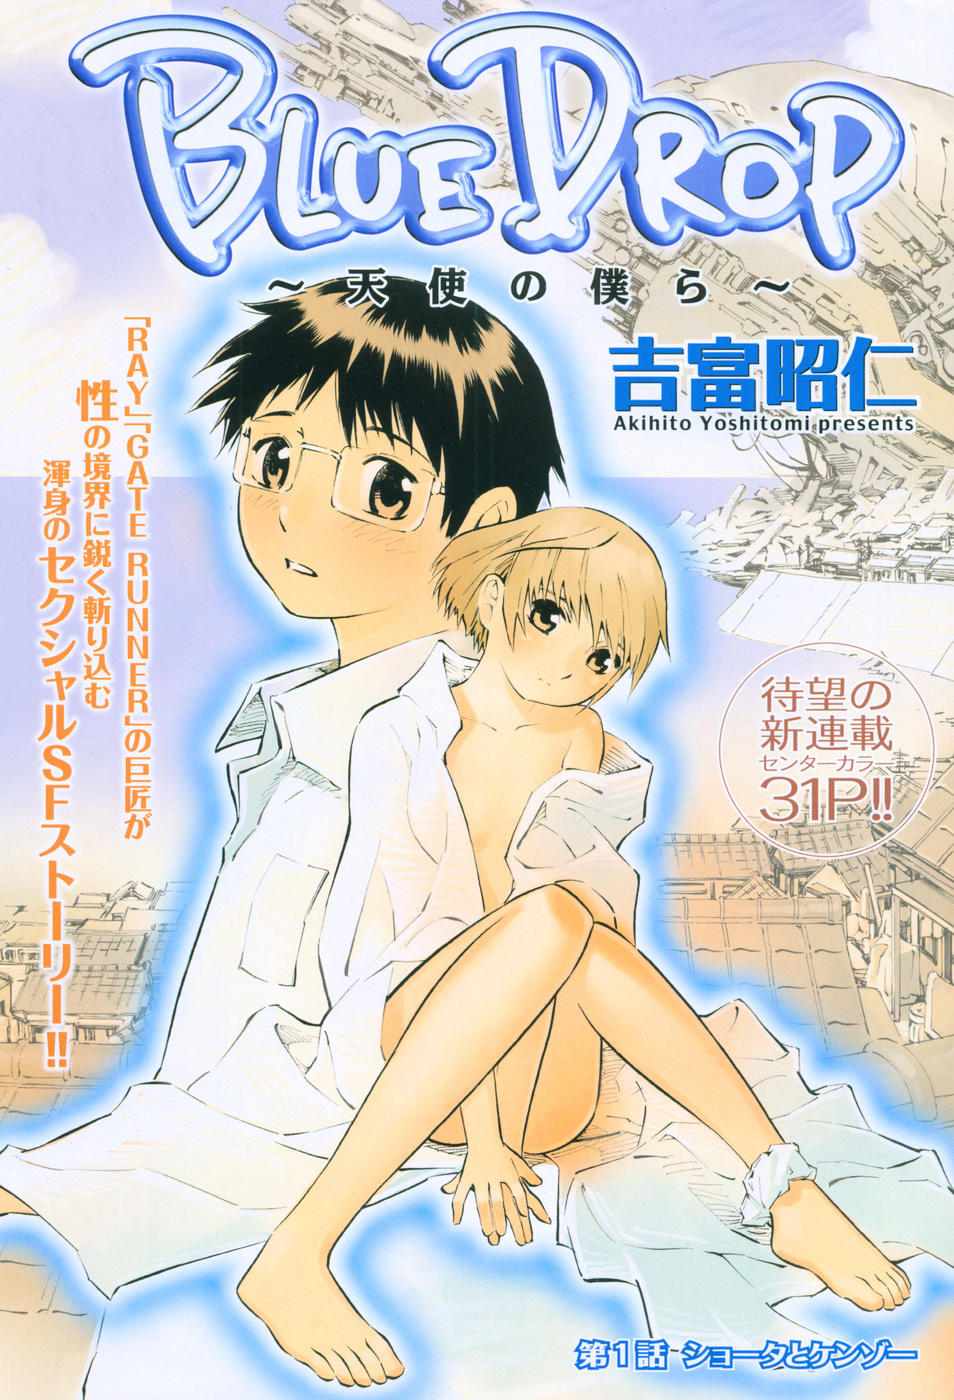 Blue drop tenshi no bokura manga